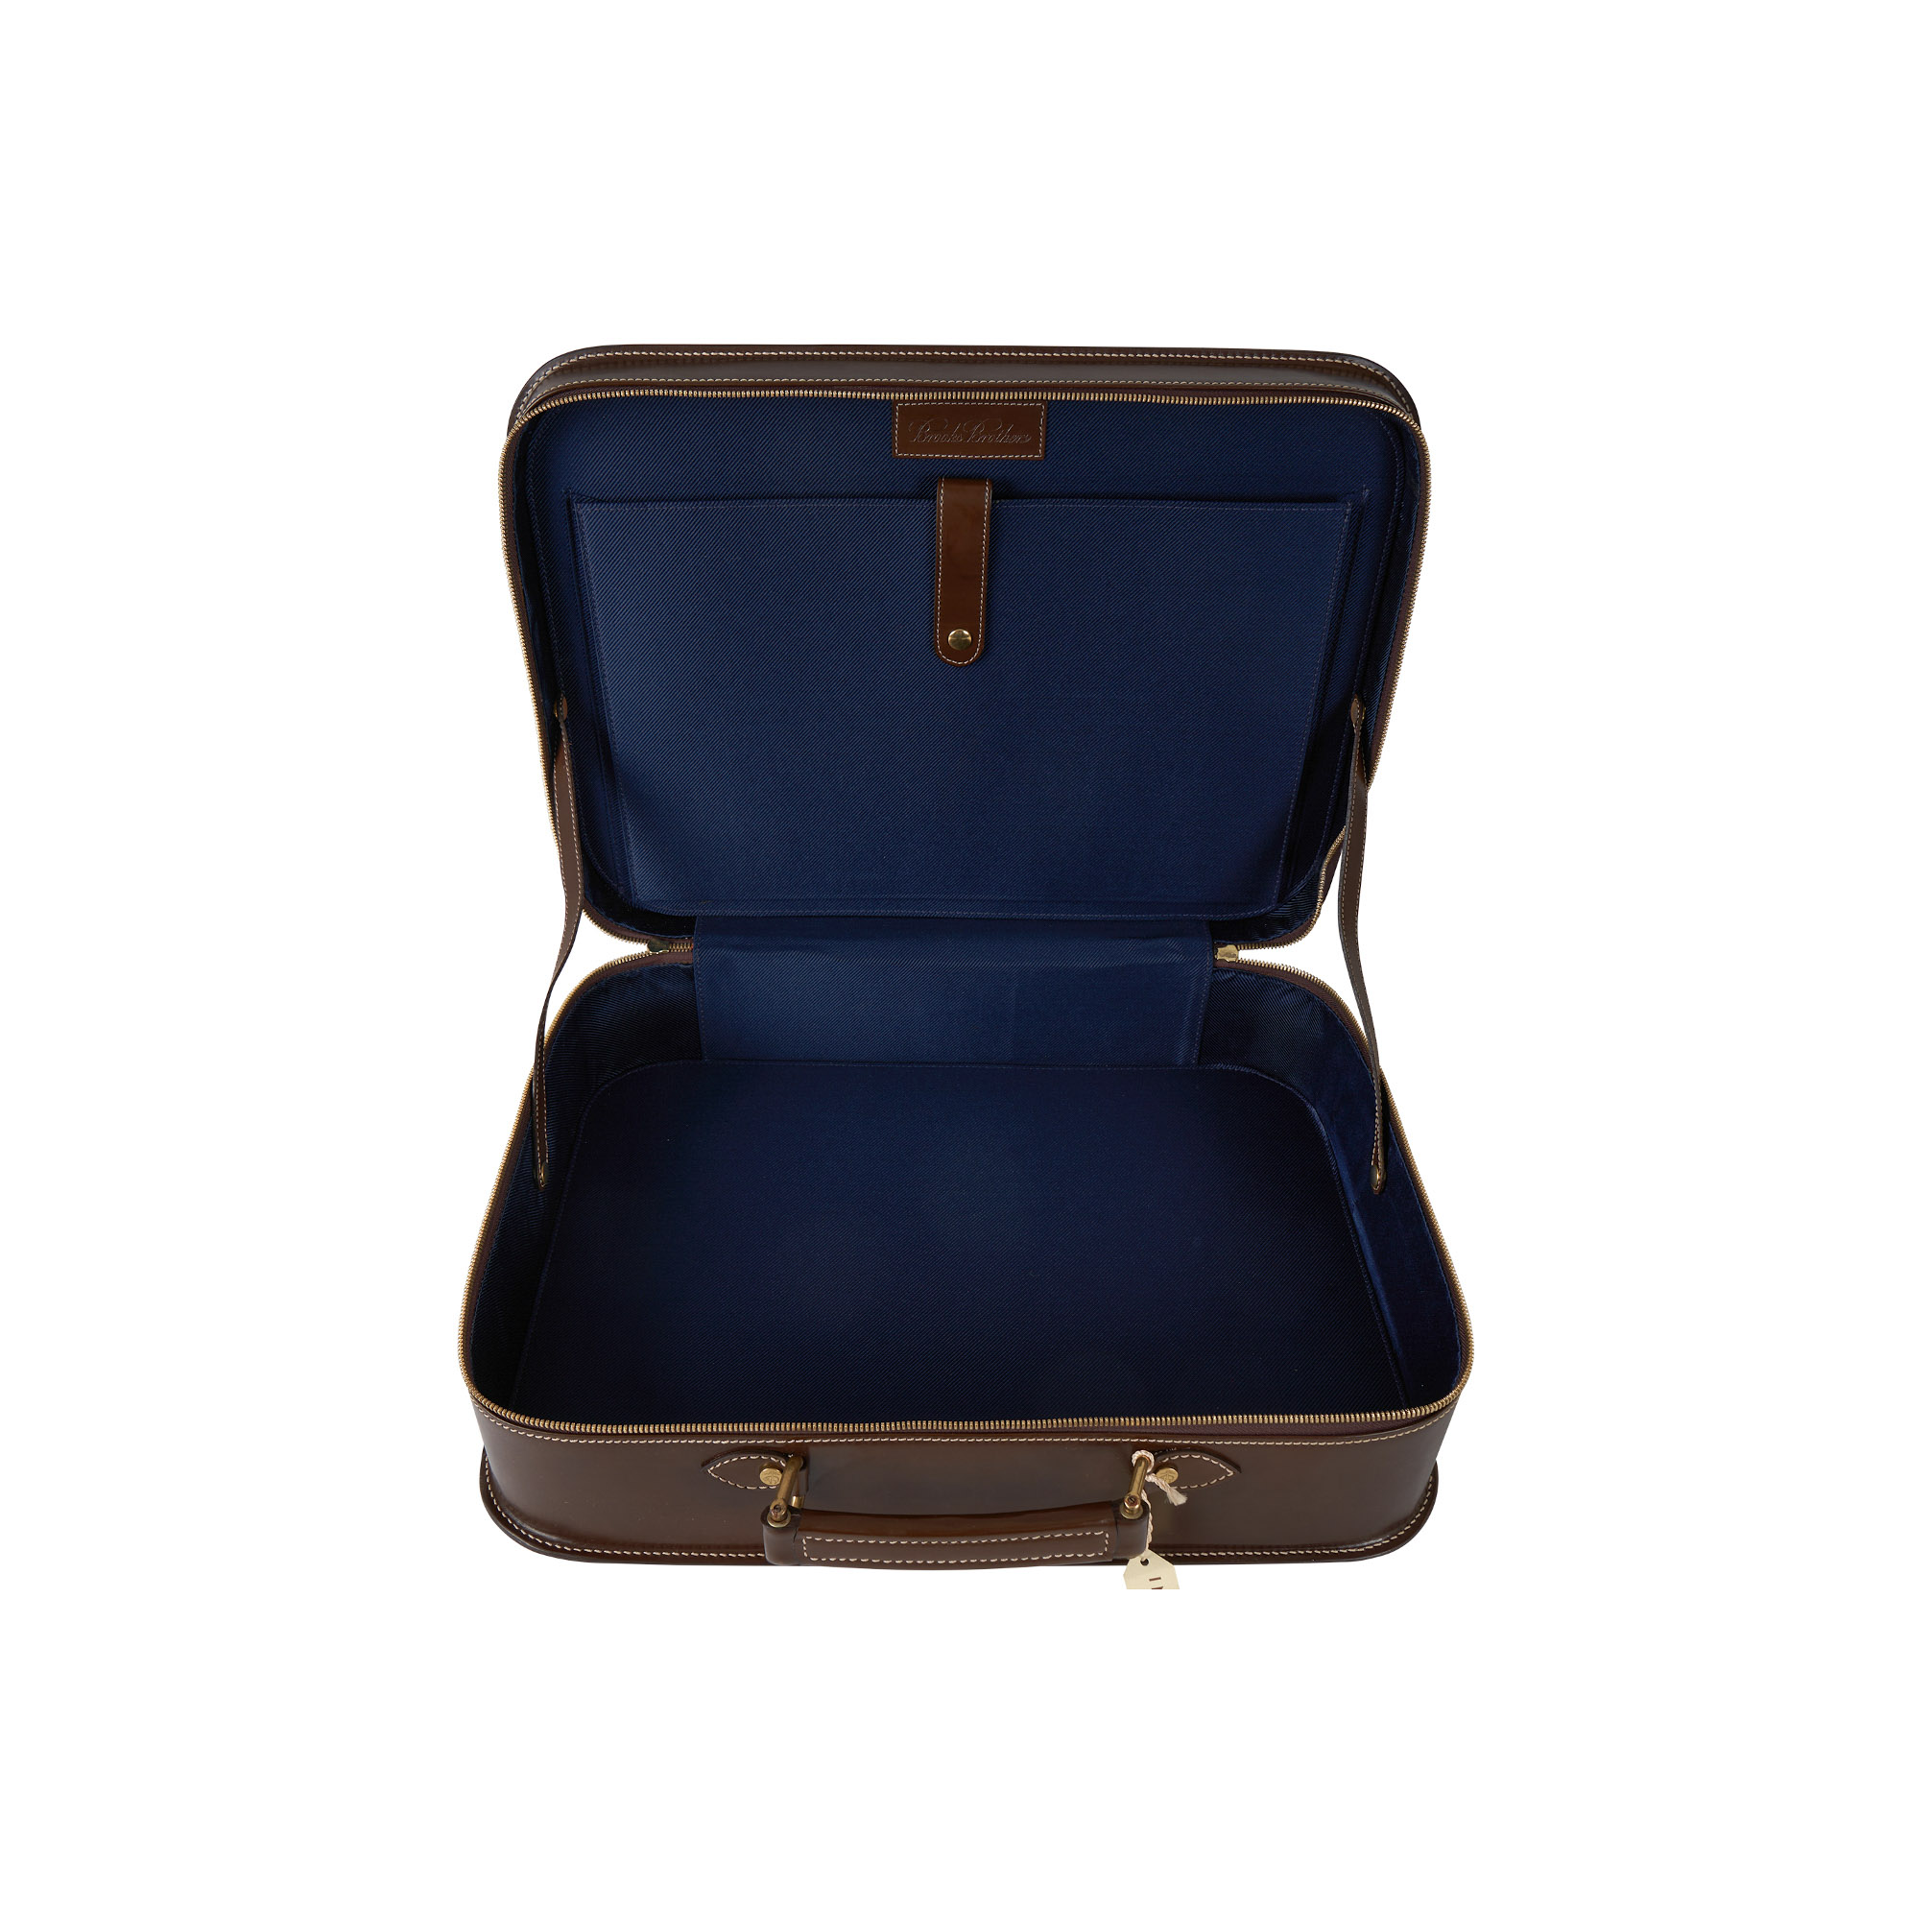 Brooks Brothers Genuine leather suitcase | myglobaltax.com